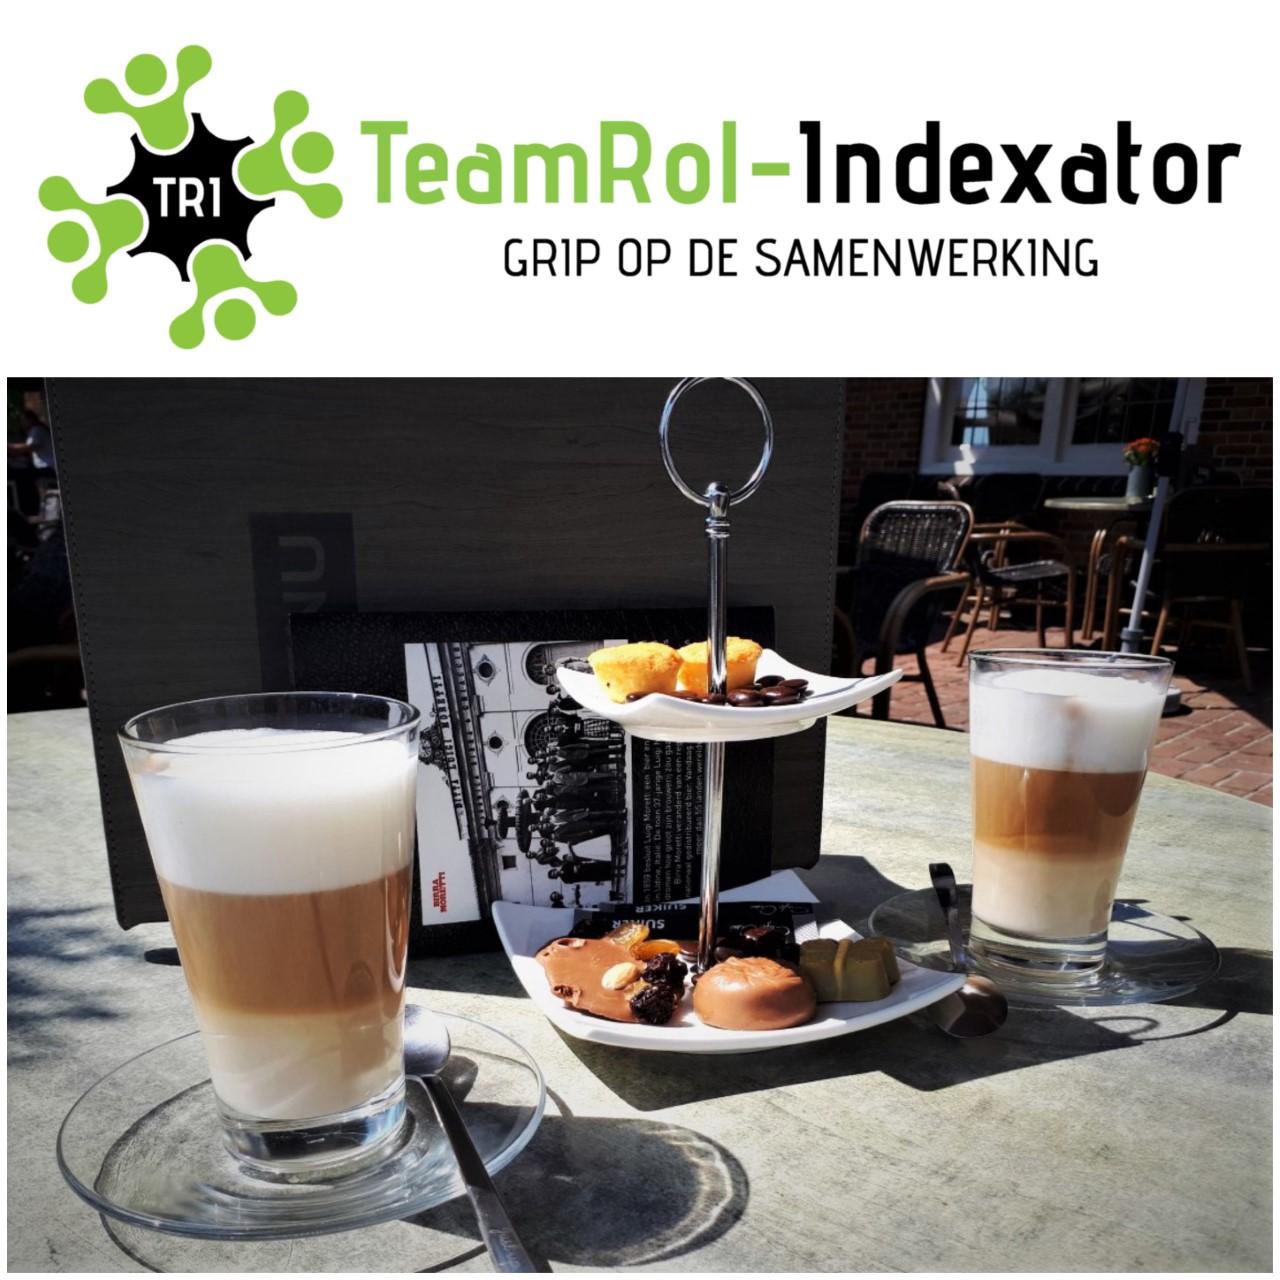 Expert TeamRol-Indexator